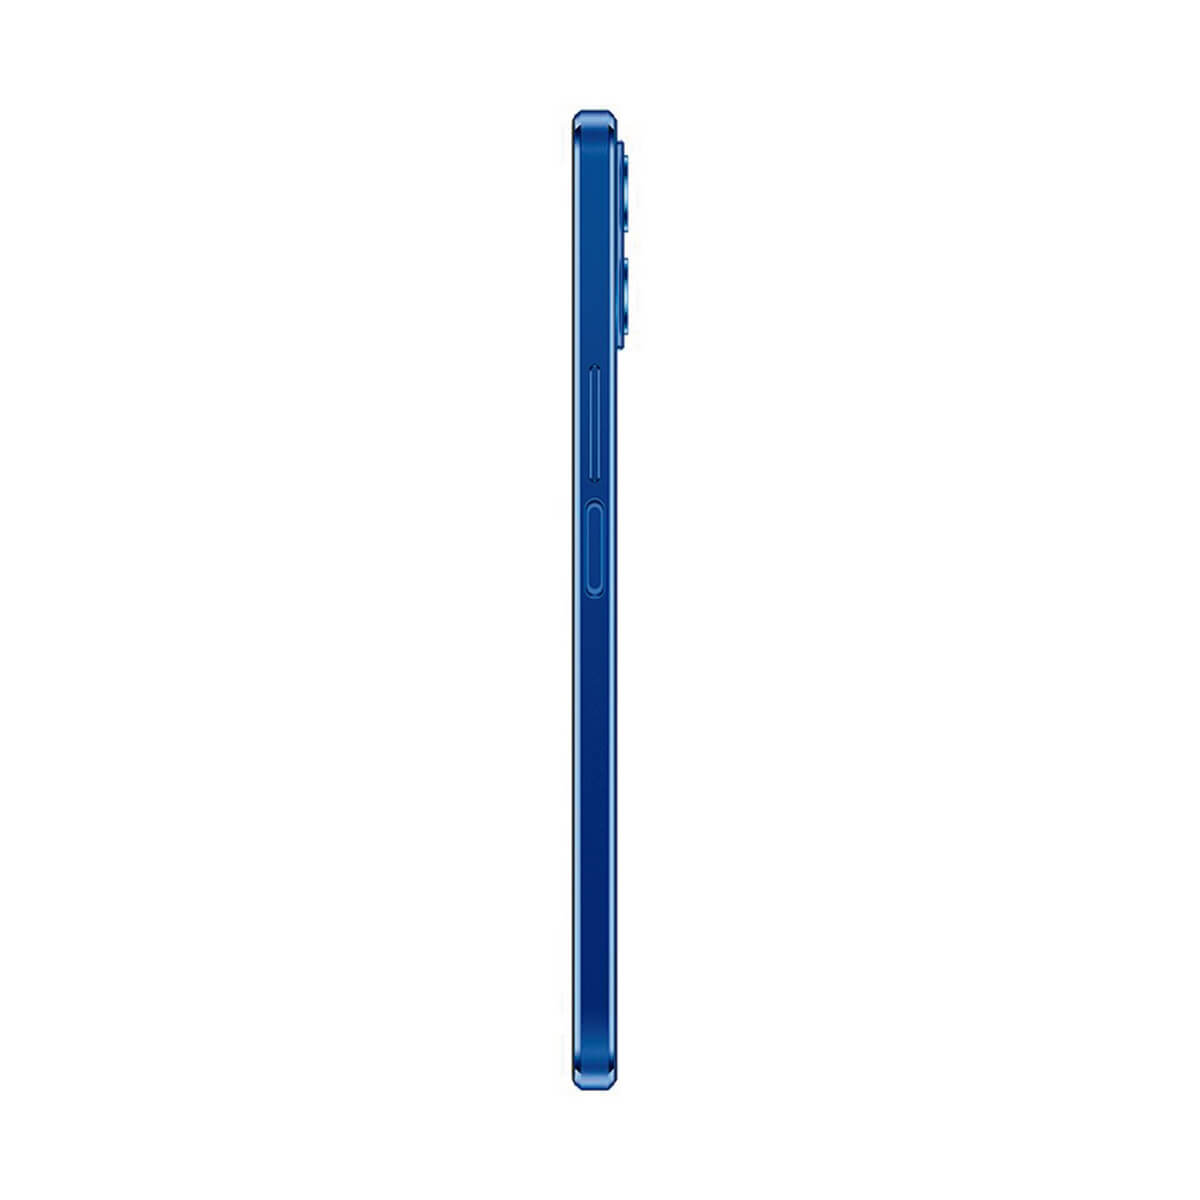 Honor X8 6GB/128GB Azul (Ocean Blue) Dual SIM TFY-LX1 – DESPRECINTADO